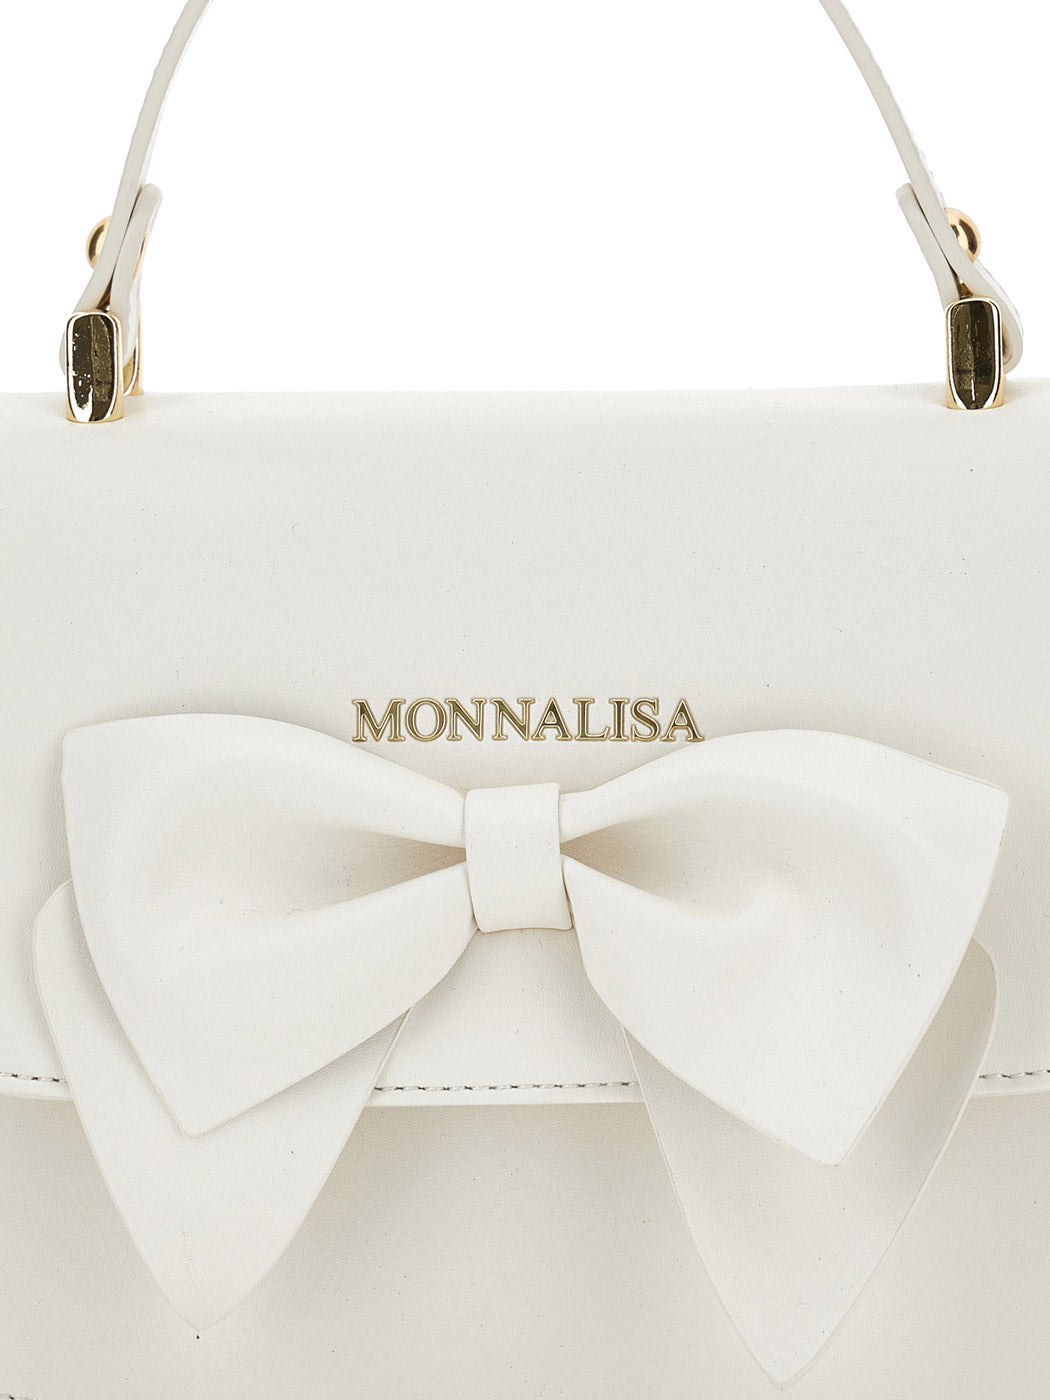 MONNALISA Cream regenerated leather bag for girl-17B001